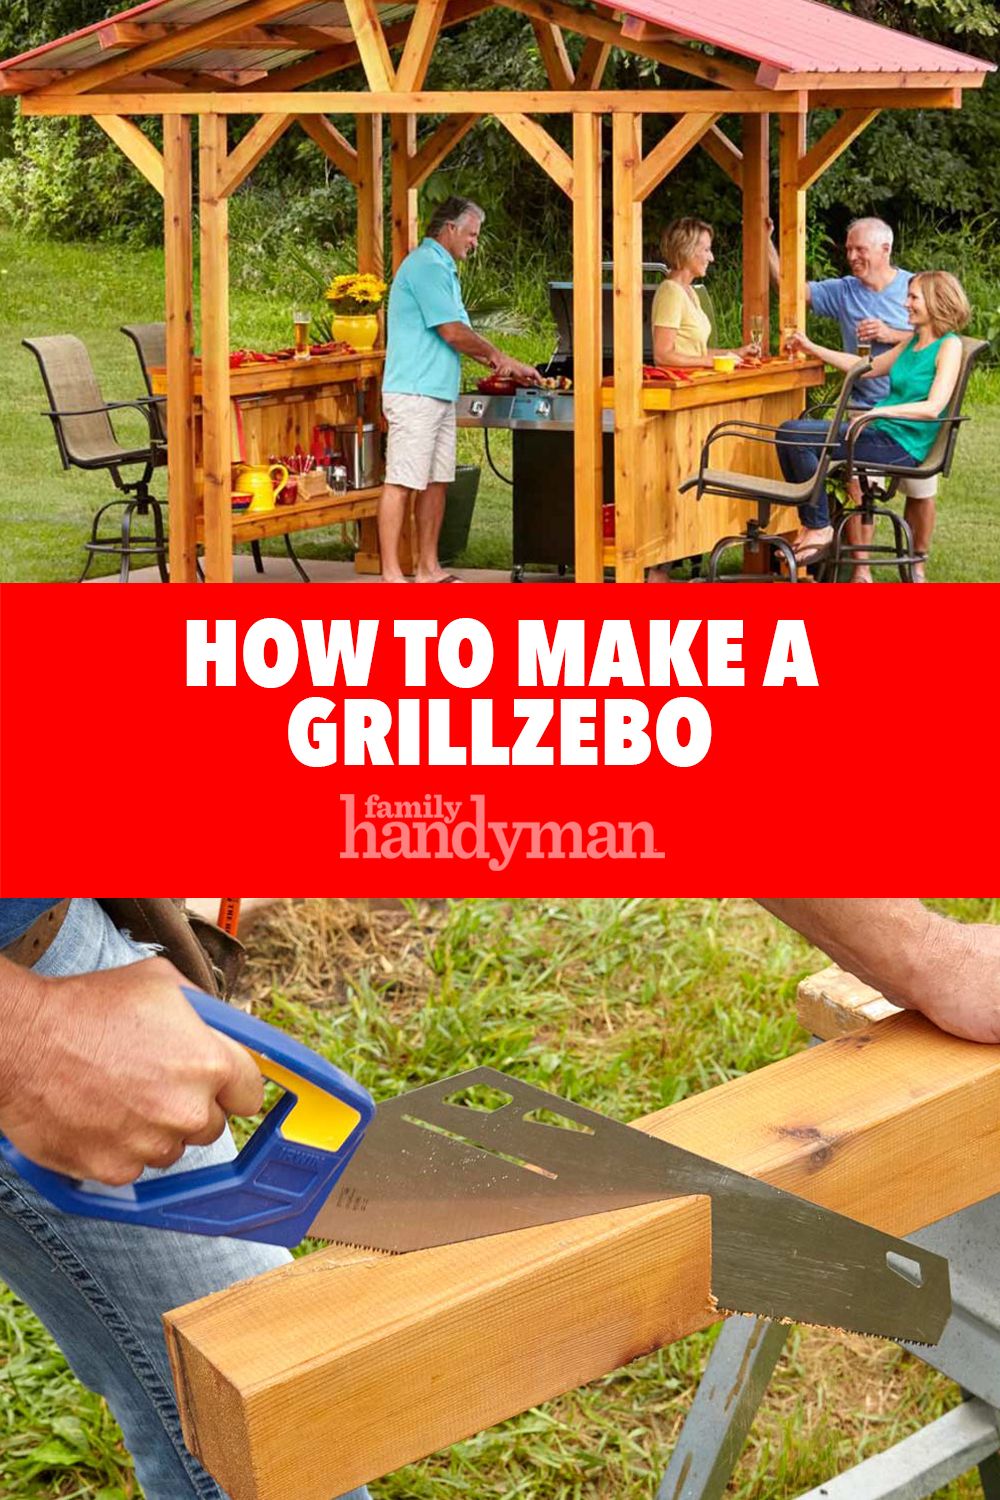 Grill Gazebo Ideas for Backyard